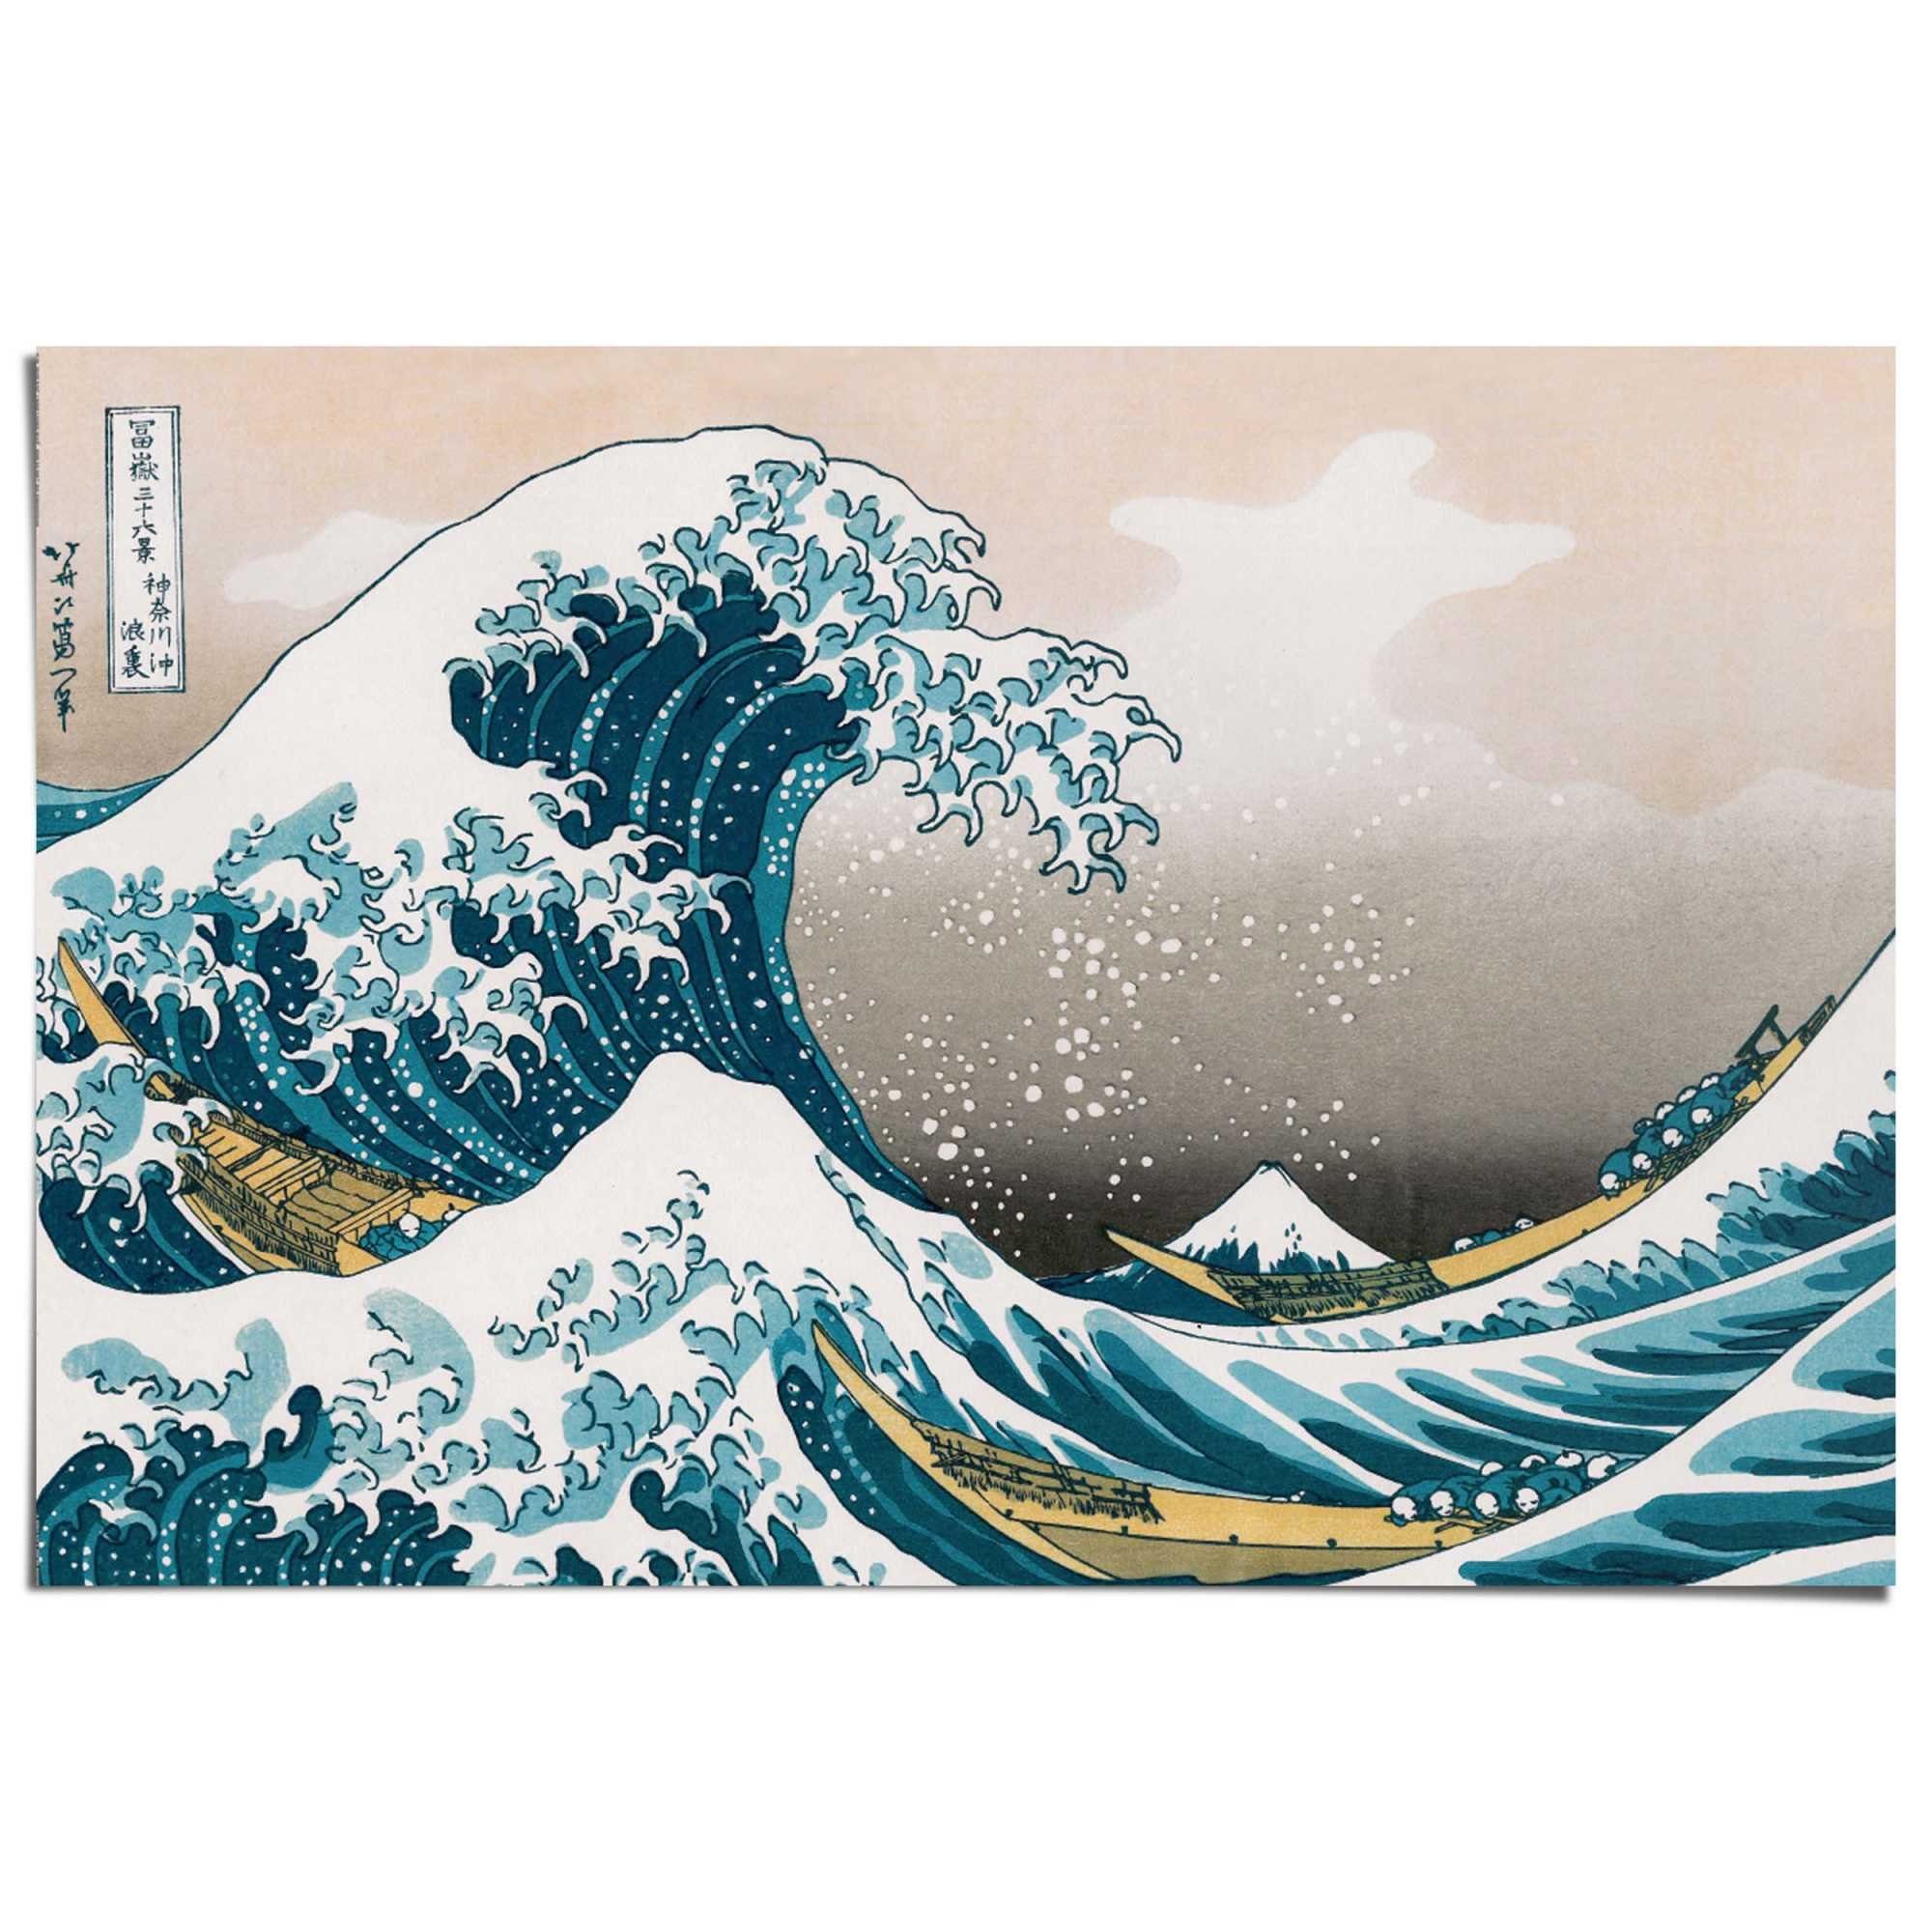 Welle Große Hokusai - Poster Reinders!